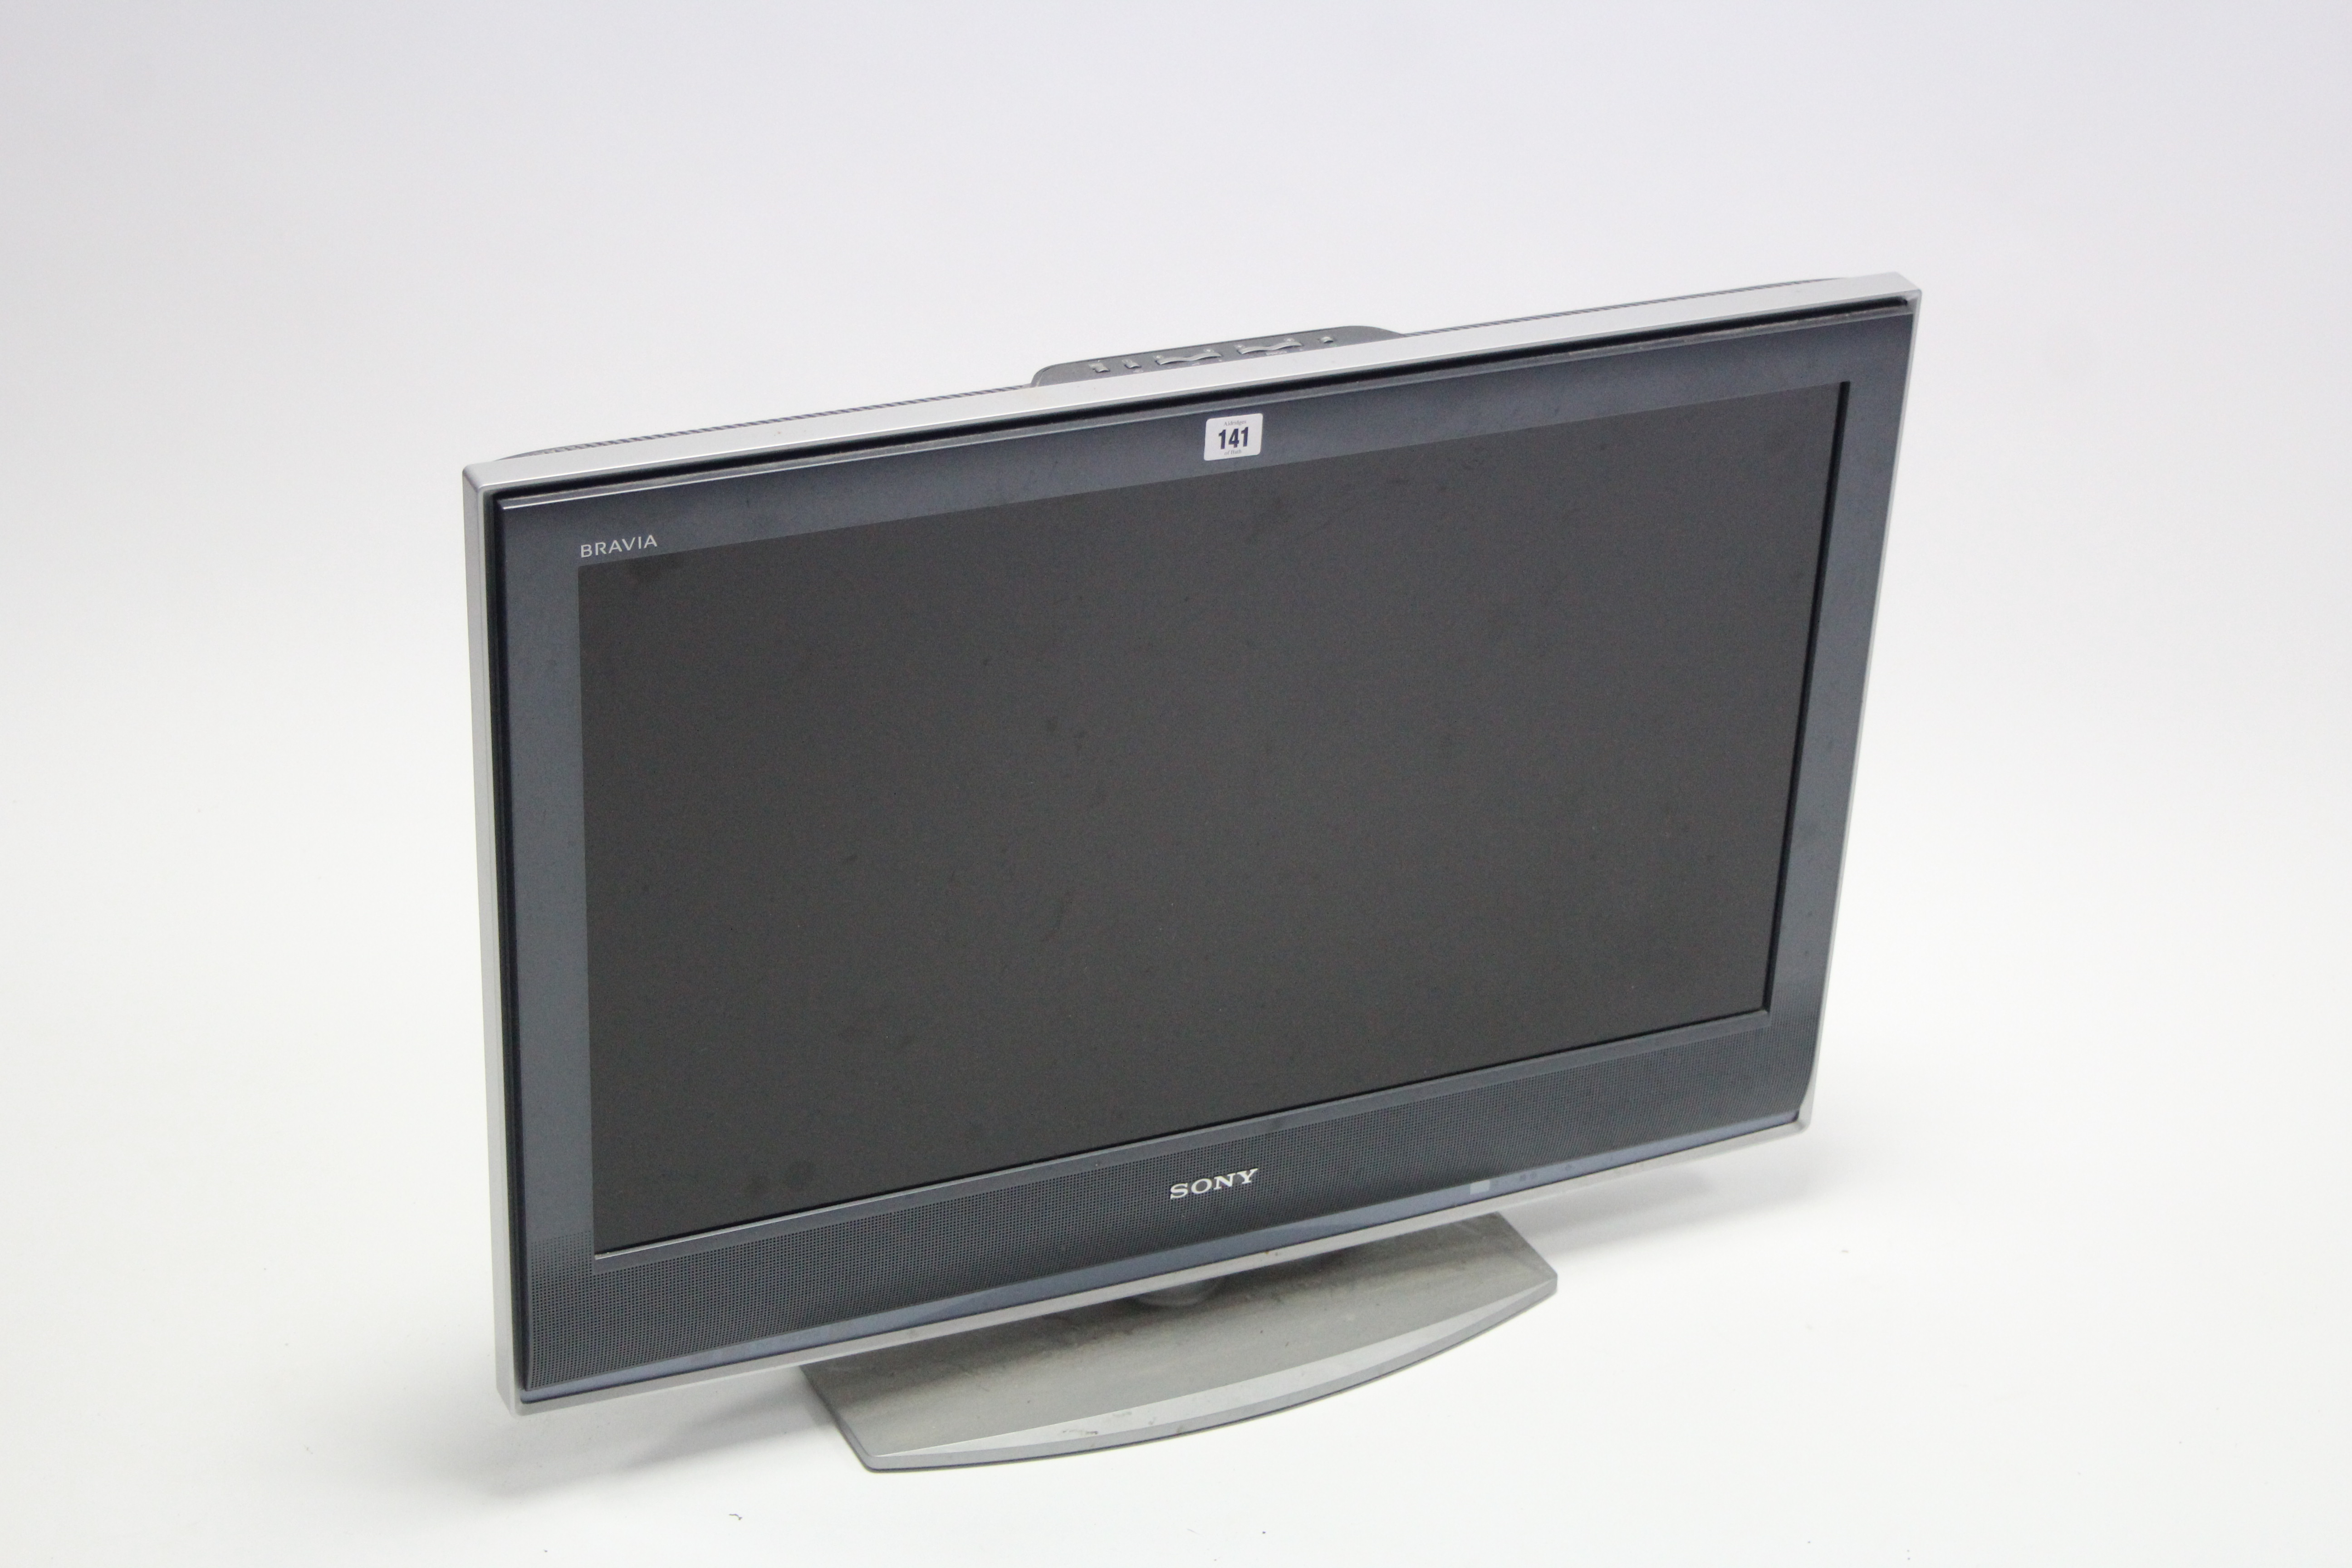 A Sony Bravia 30” LCD television.